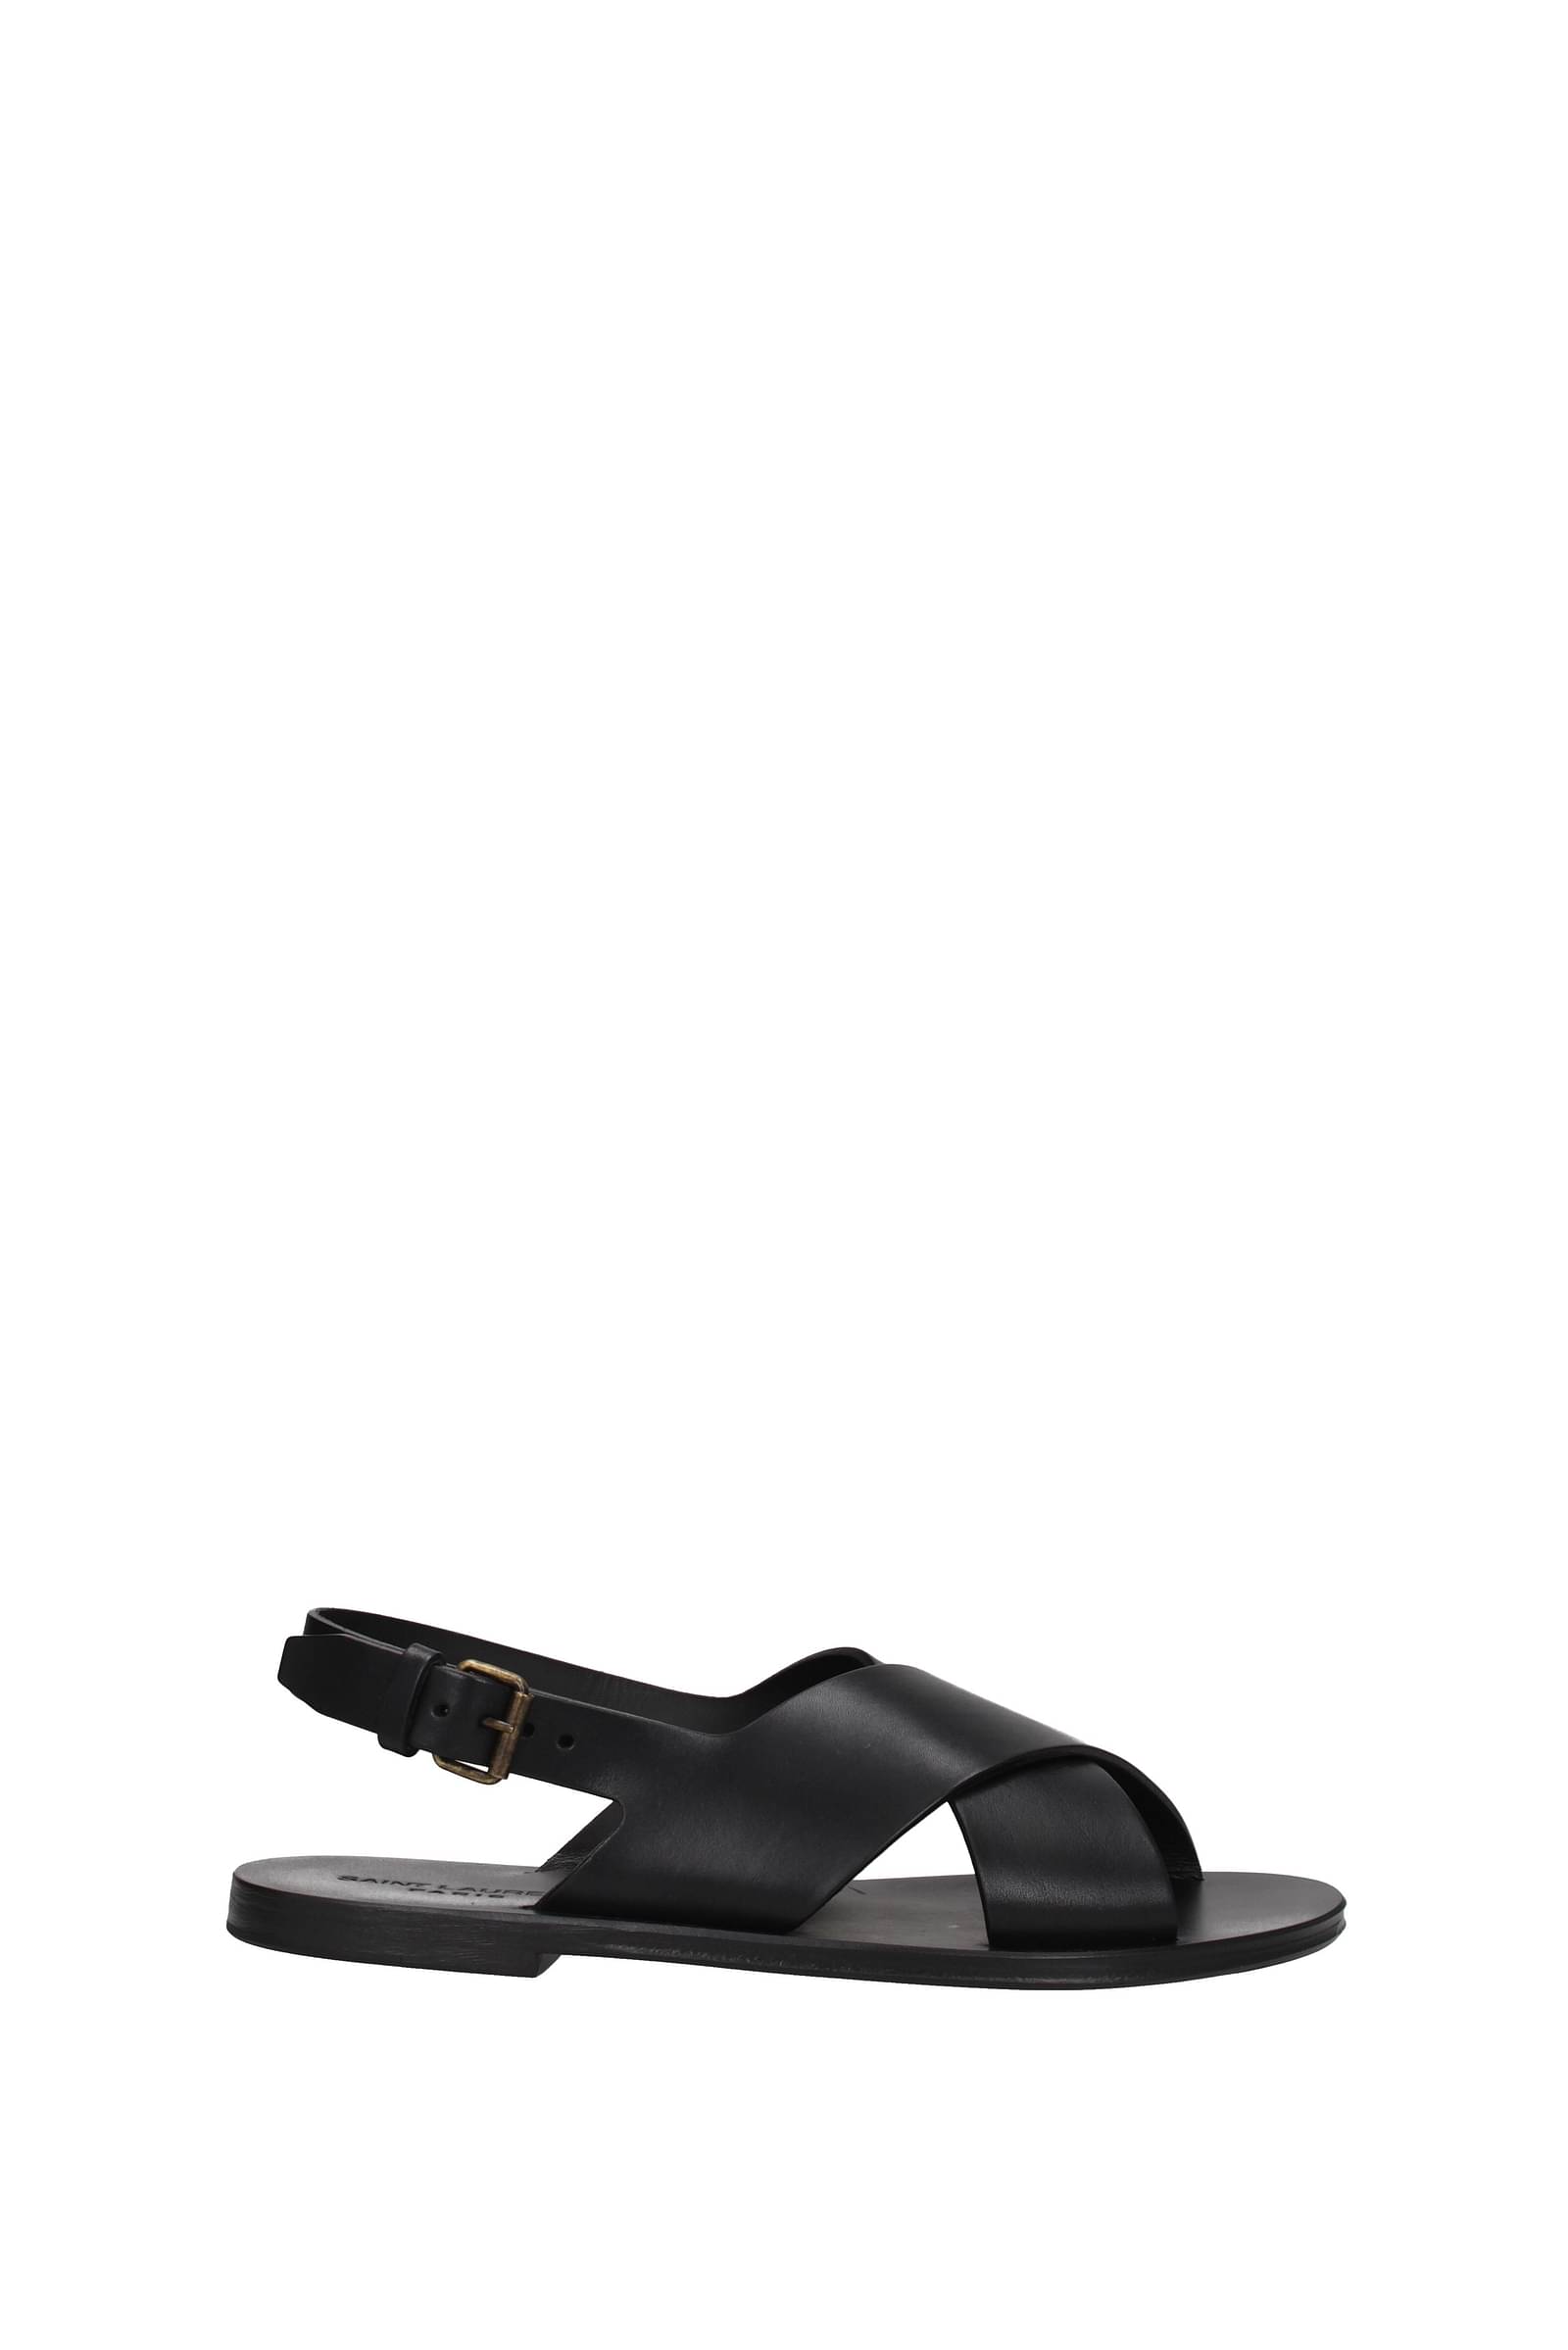 Gucci Black Leather Cross Strap Sandals Mens Size 8.5 - beyond exchange